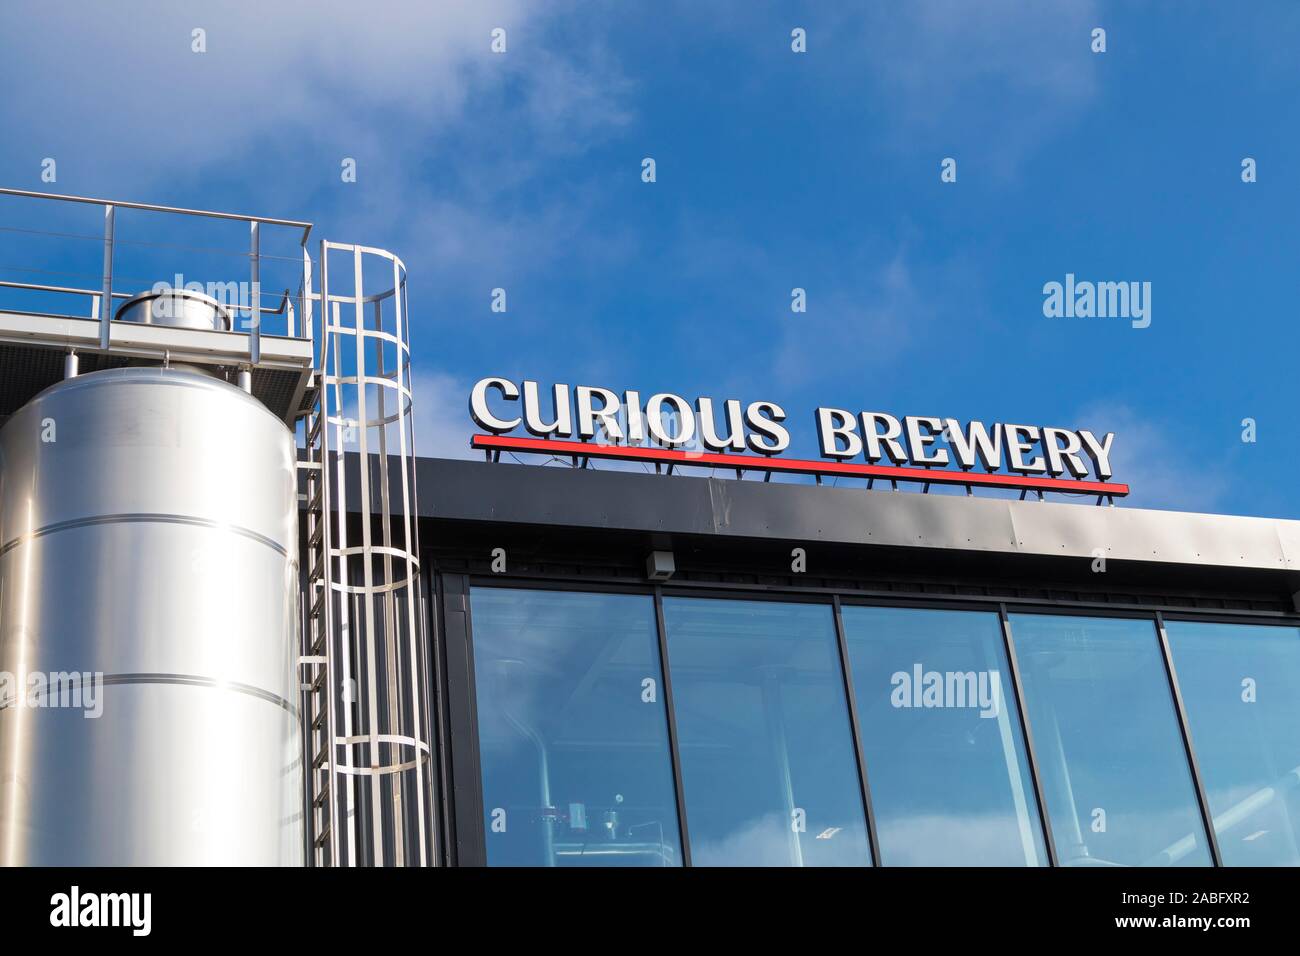 Curious brewery, micro brewery, ashford, kent, uk Stock Photo